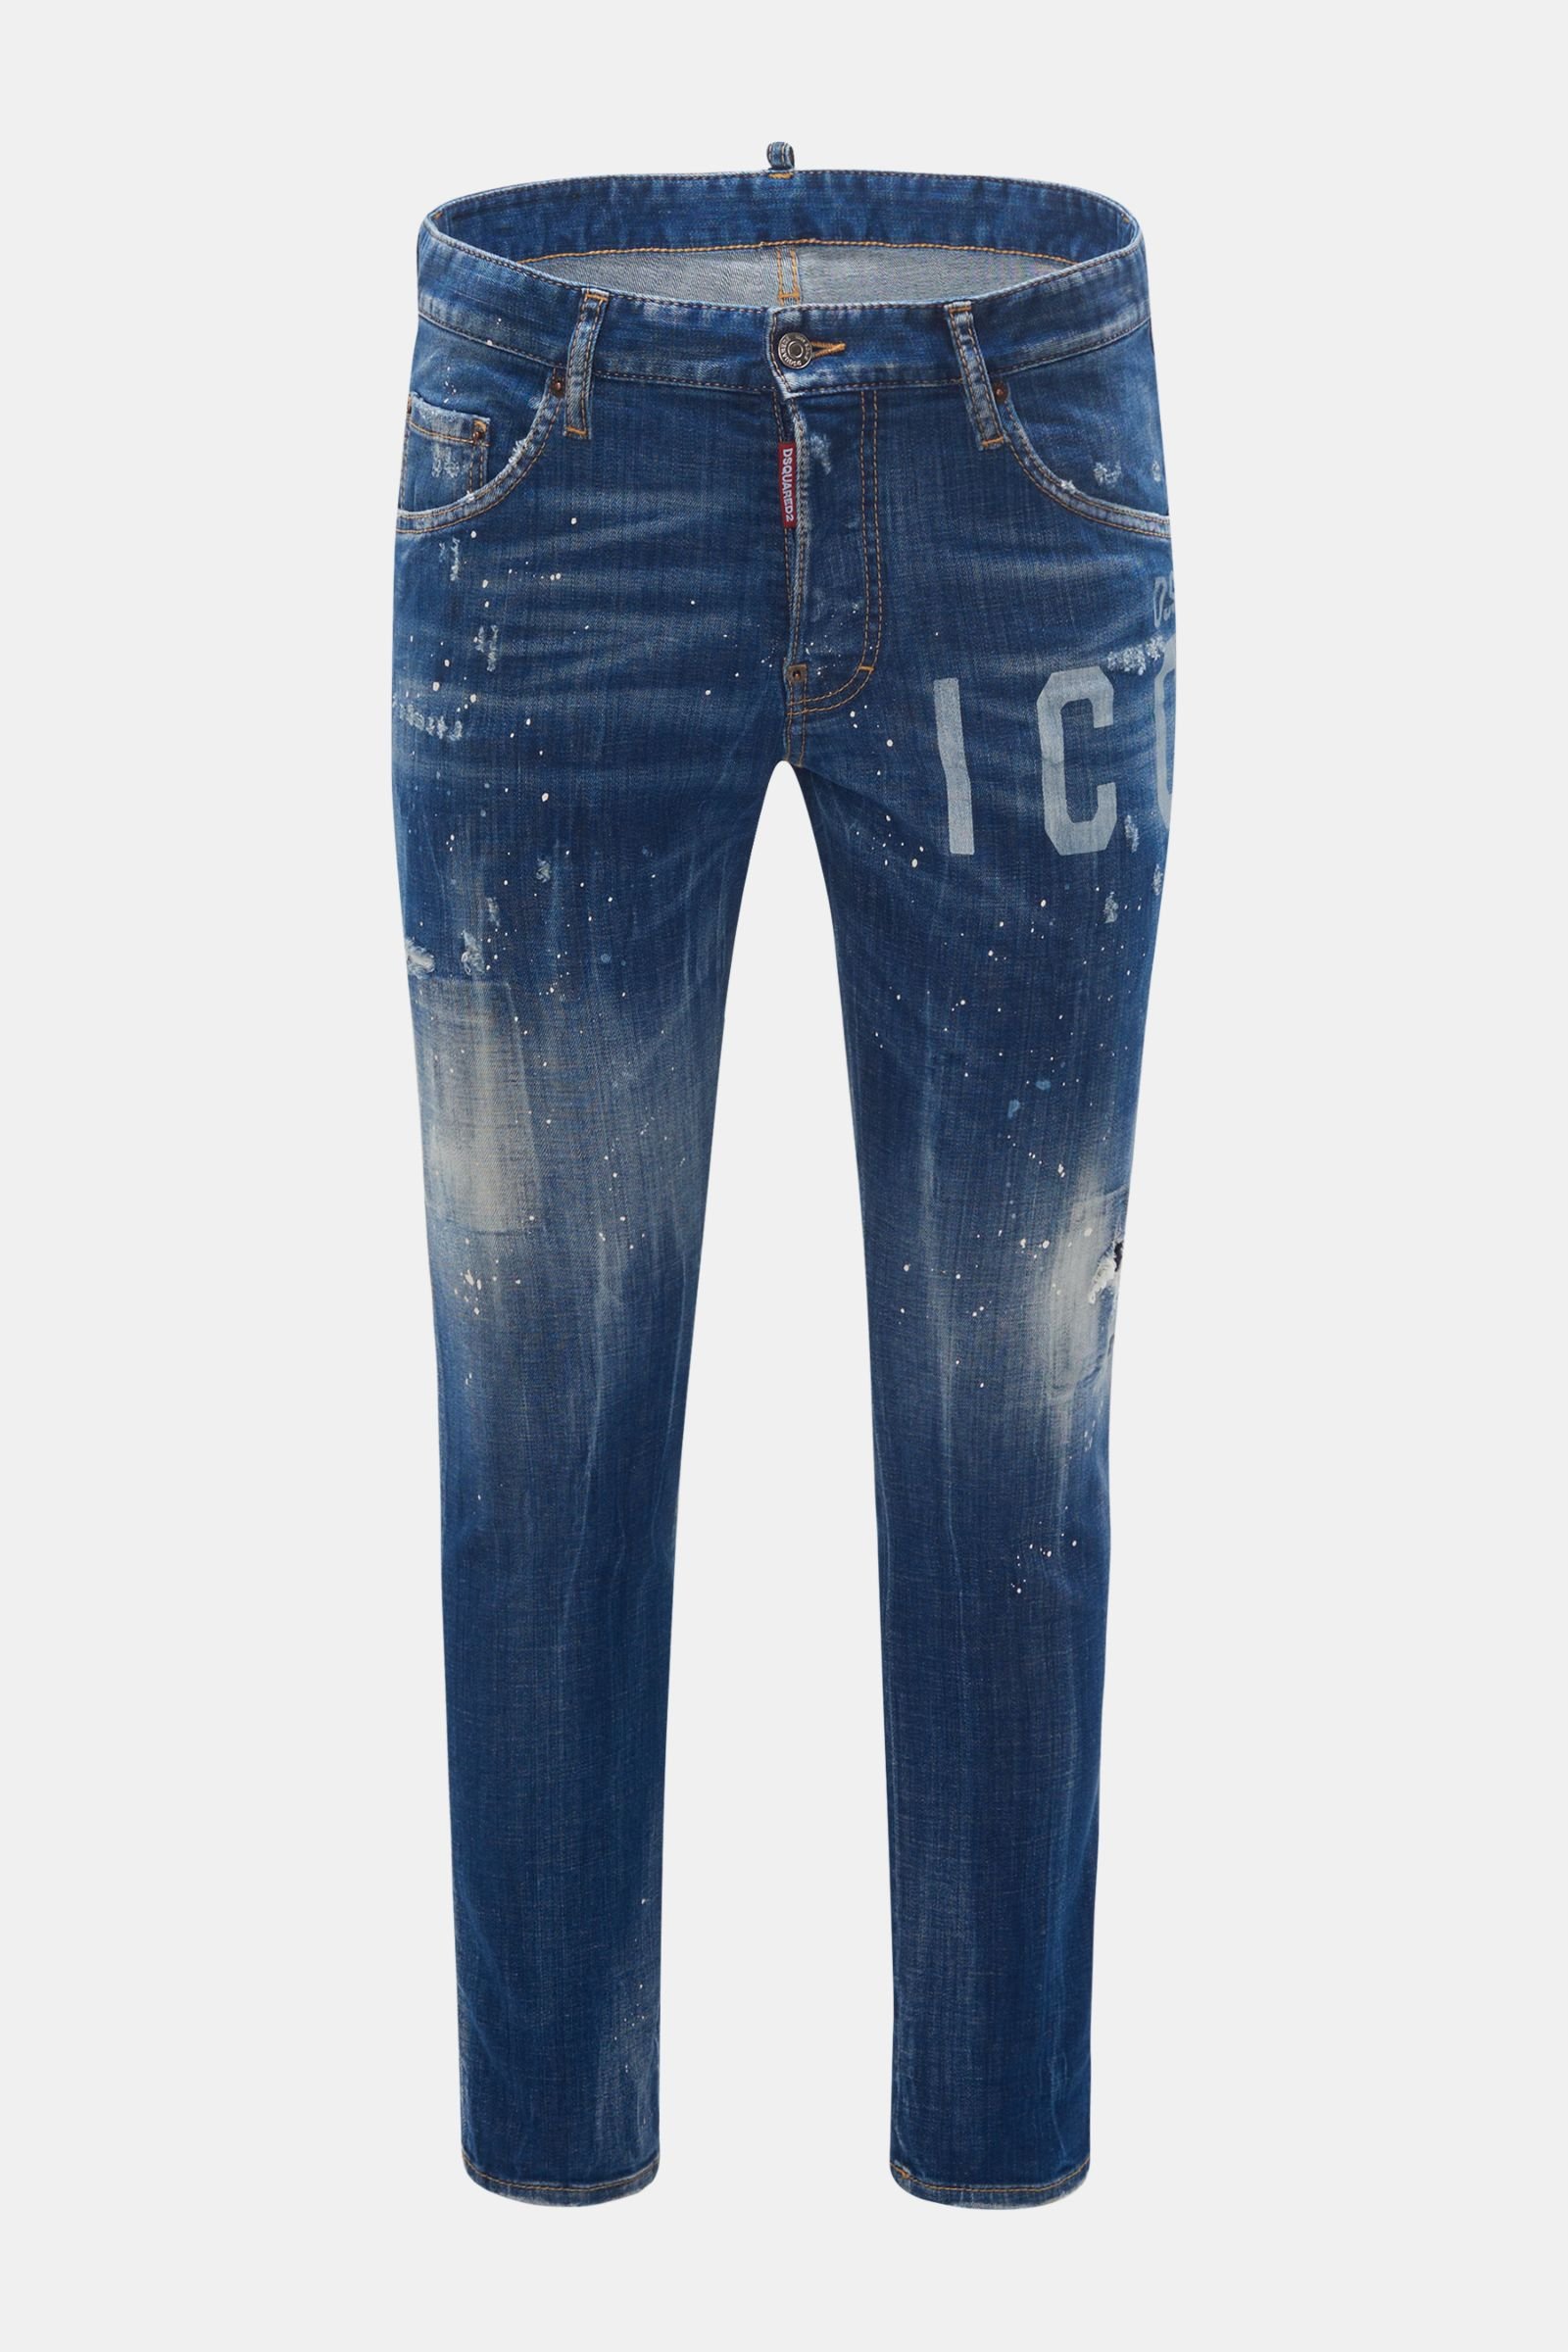 DSQUARED2 jeans 'Skater Jeans' grey-blue | BRAUN Hamburg